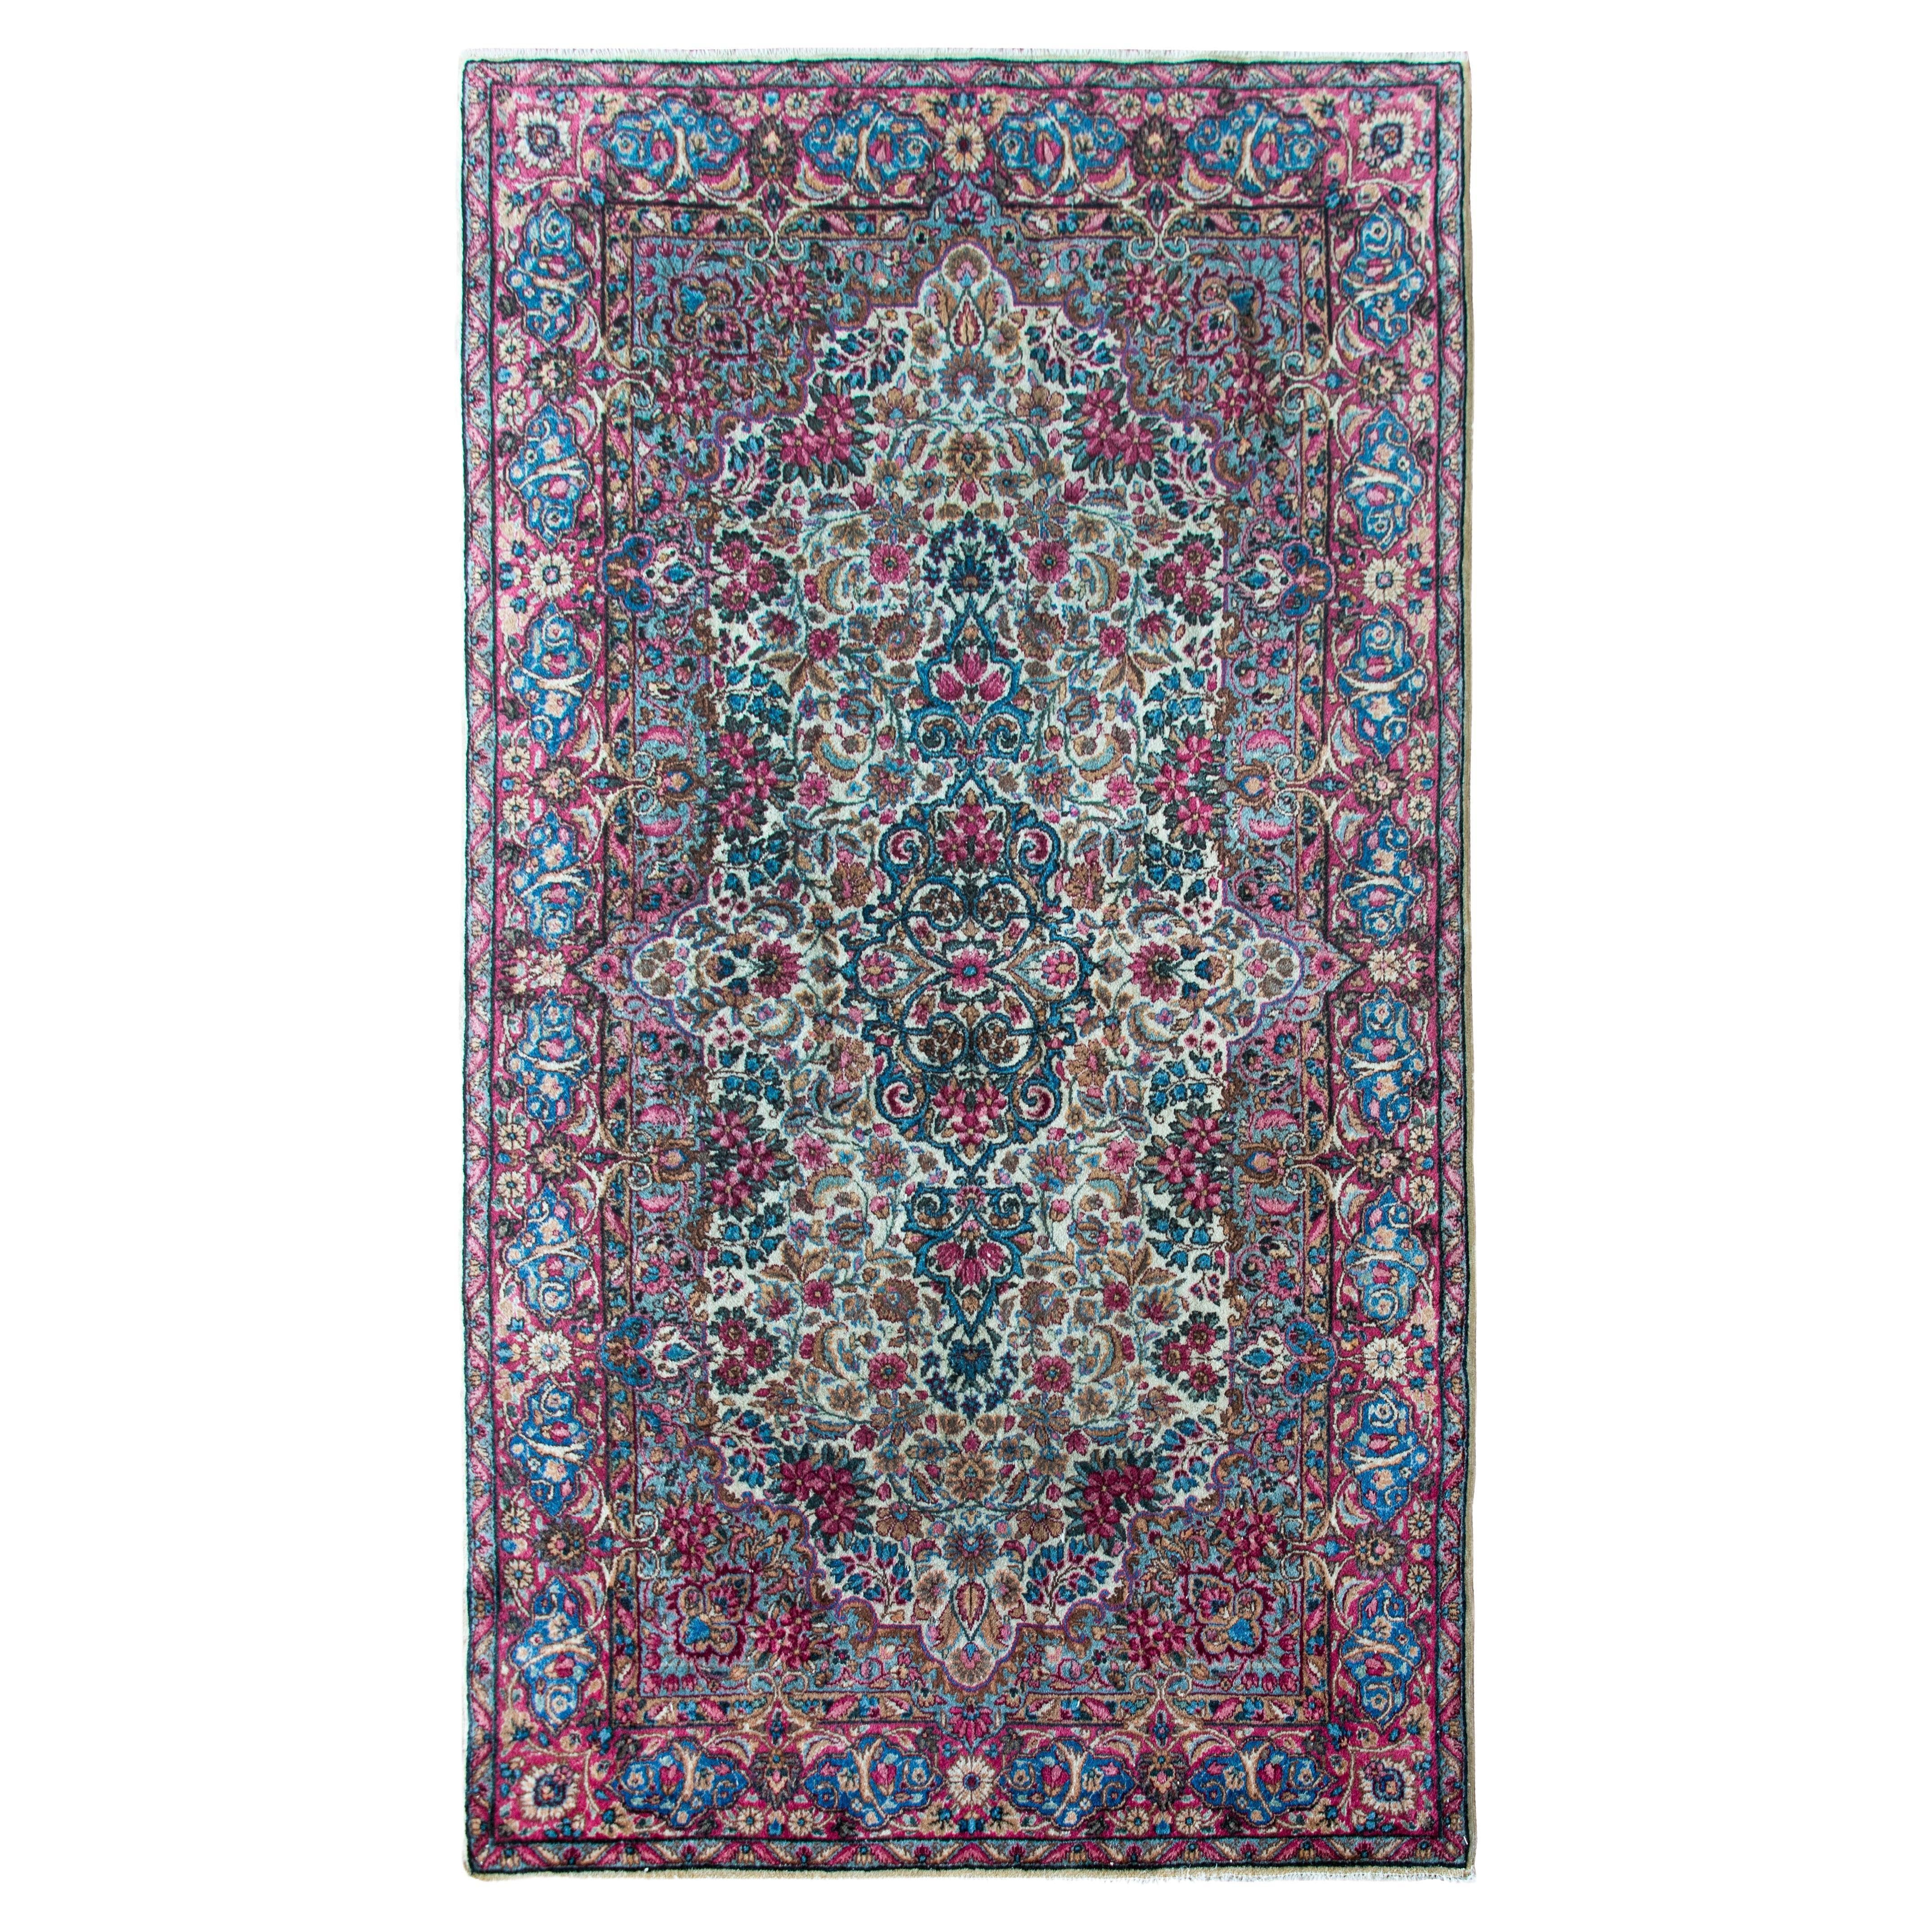 Persischer Kirman-Teppich aus dem frühen 20.